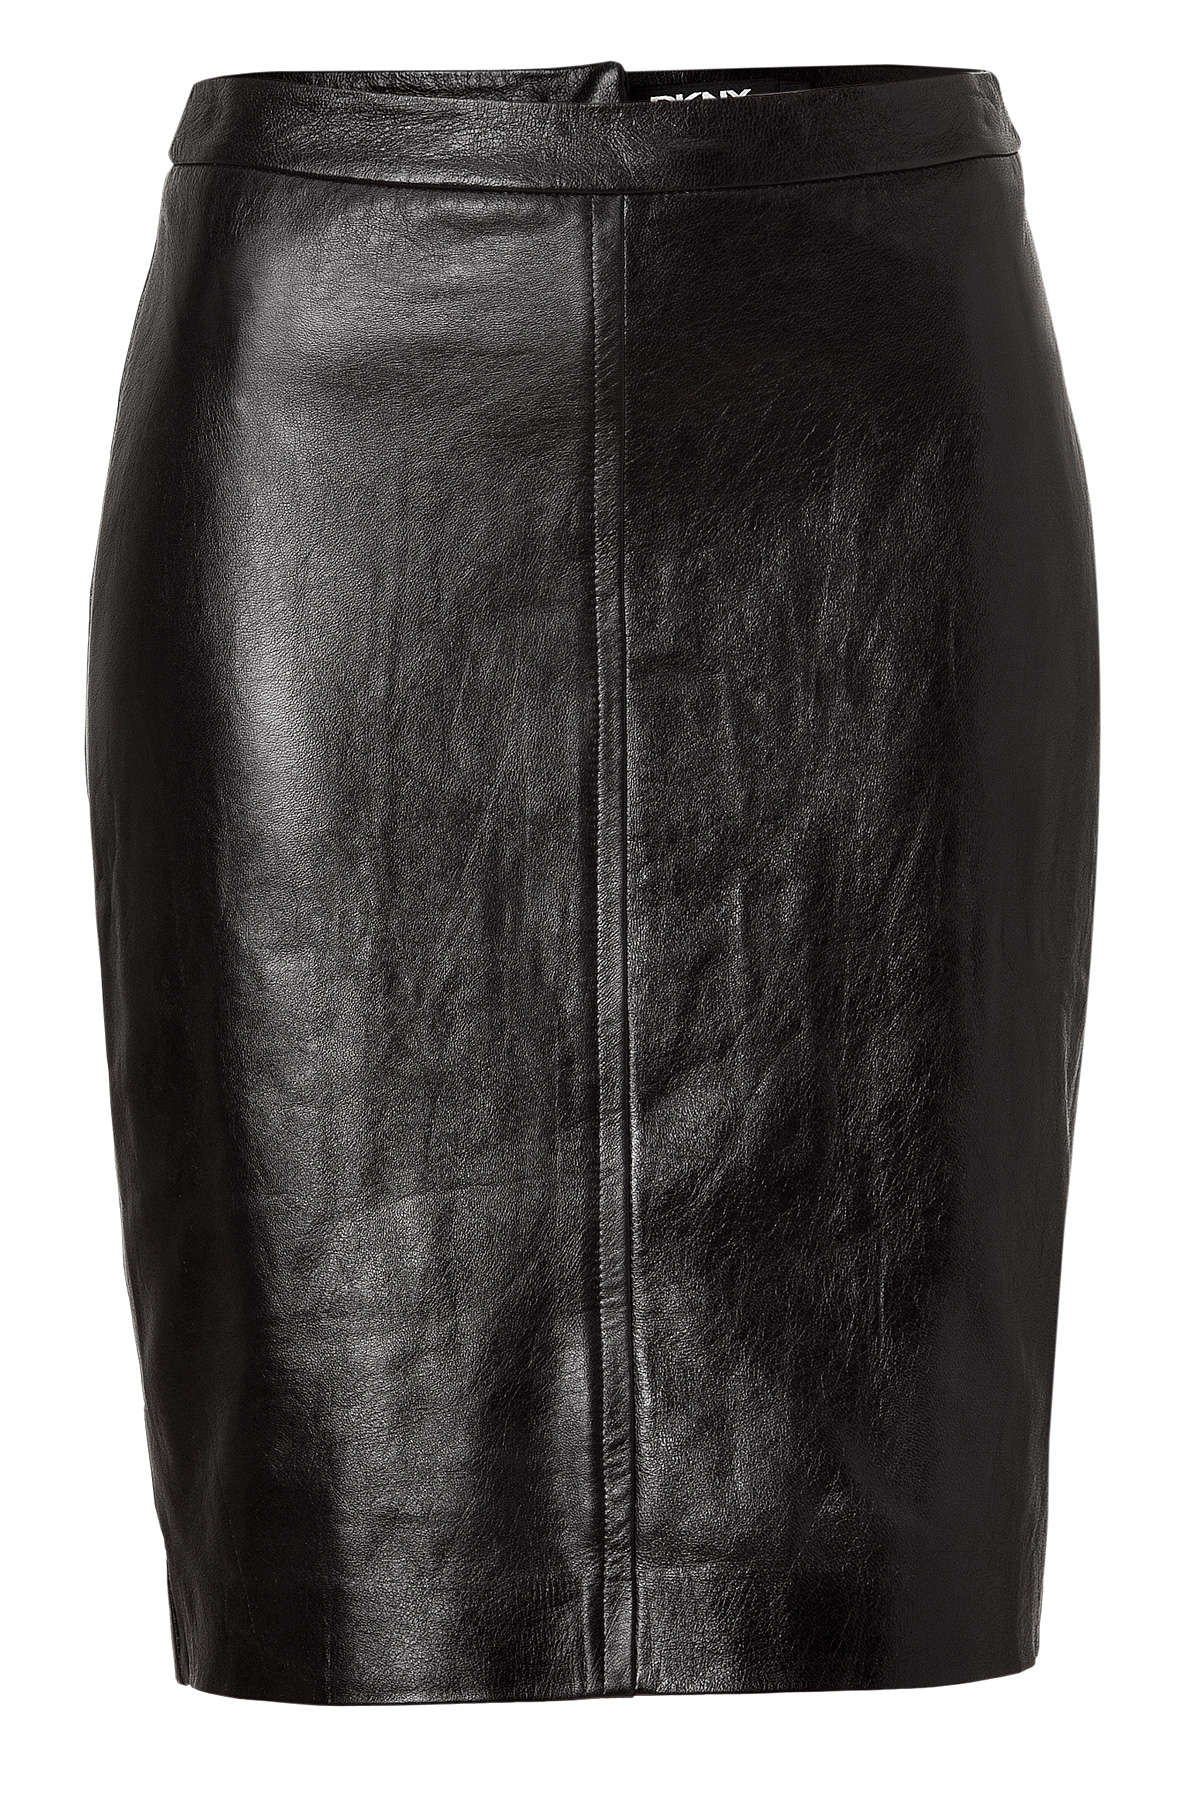 DKNY Black Leather Skirt - Lyst